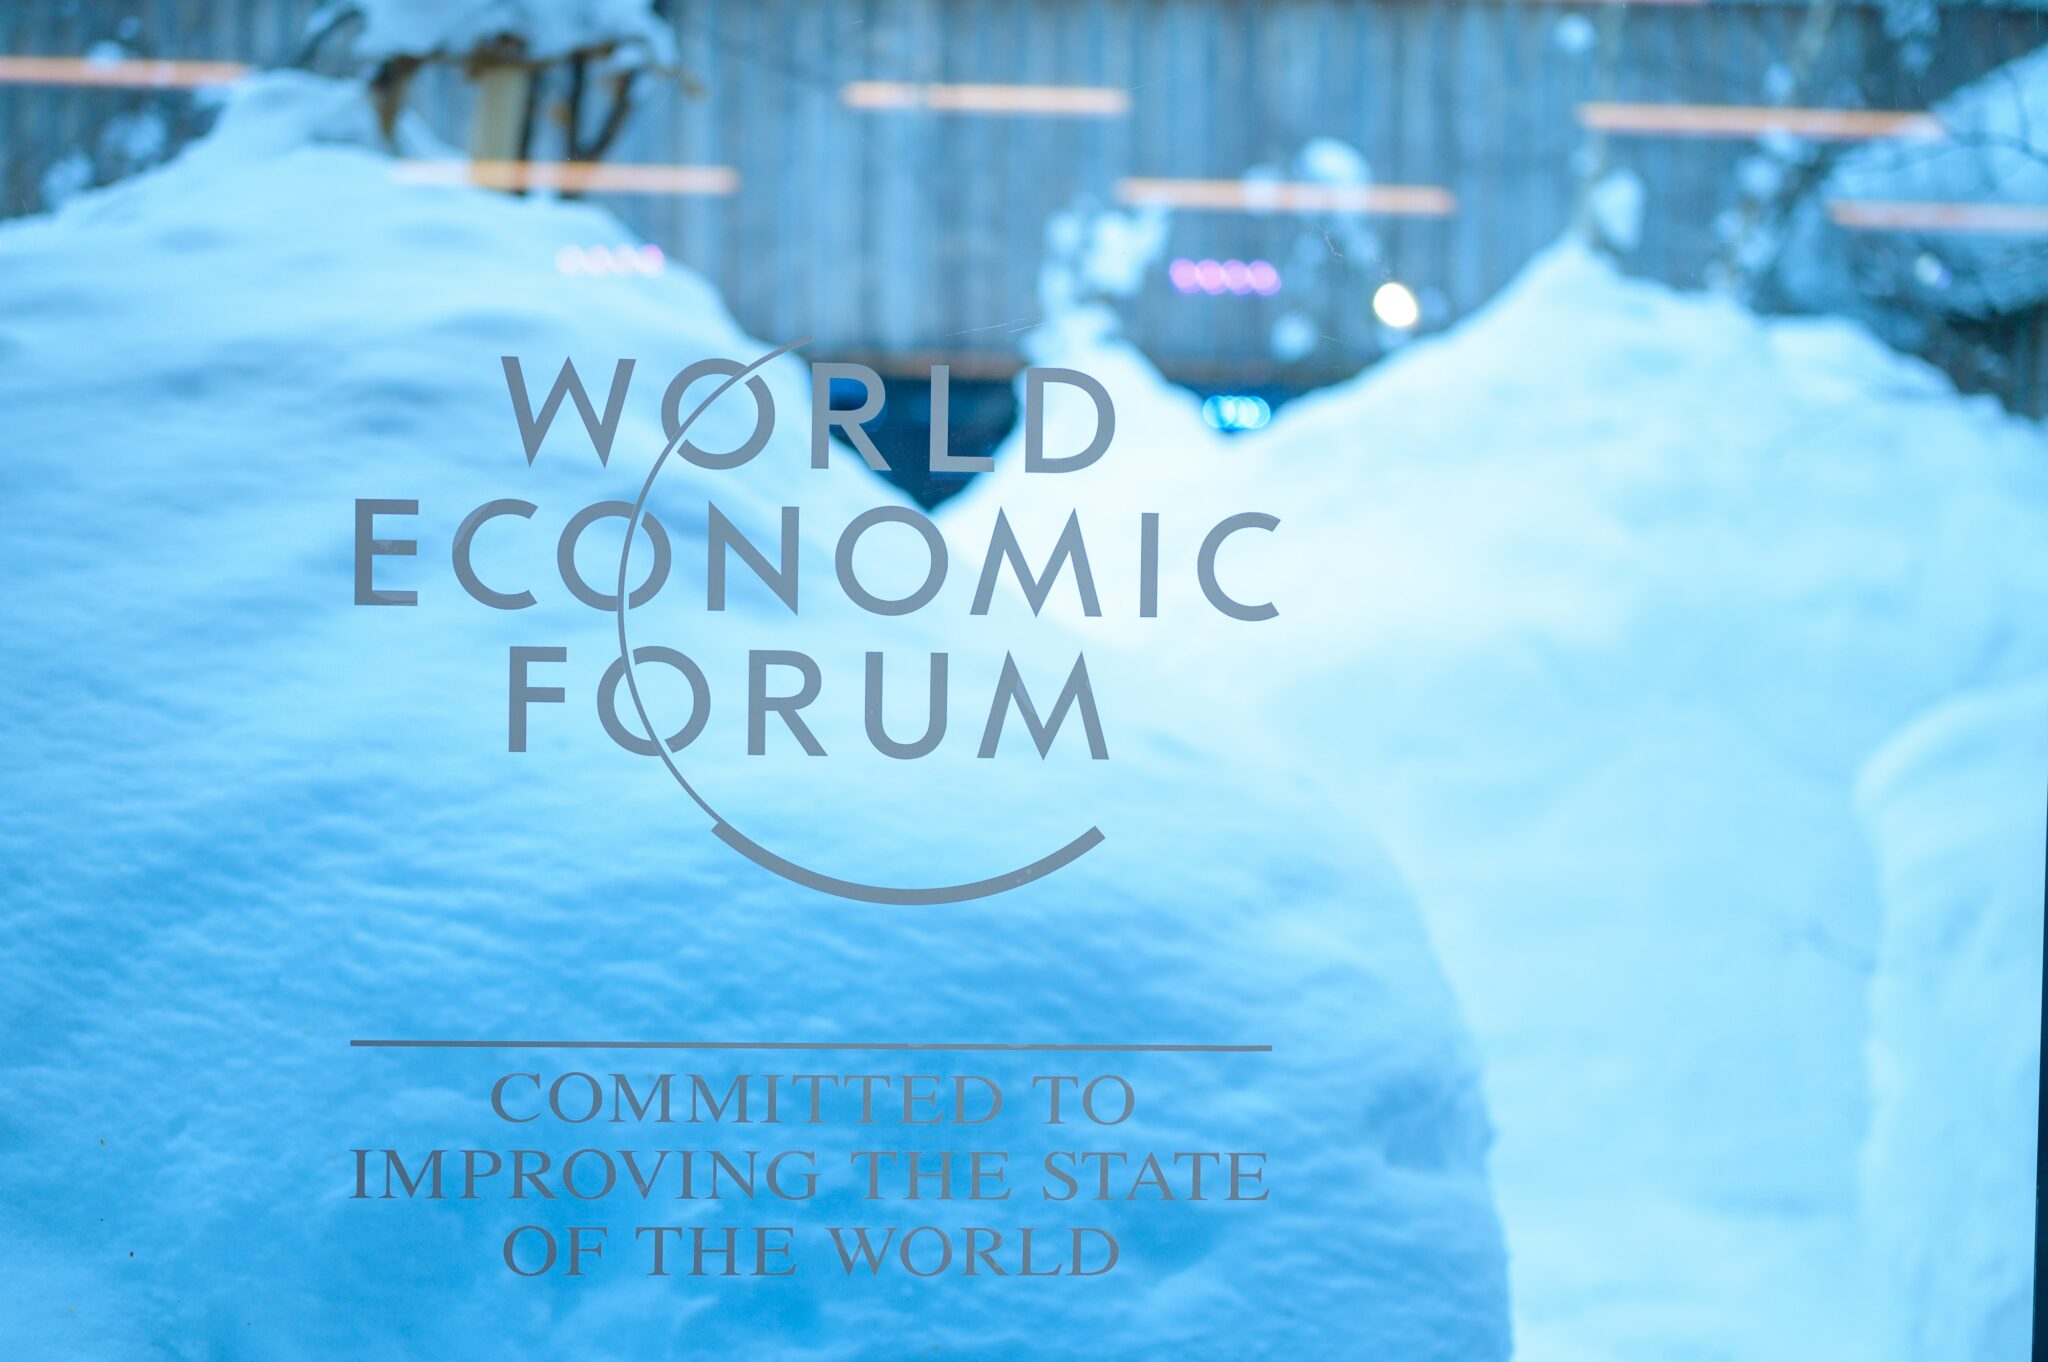 elon musk versus The World Economic Forum